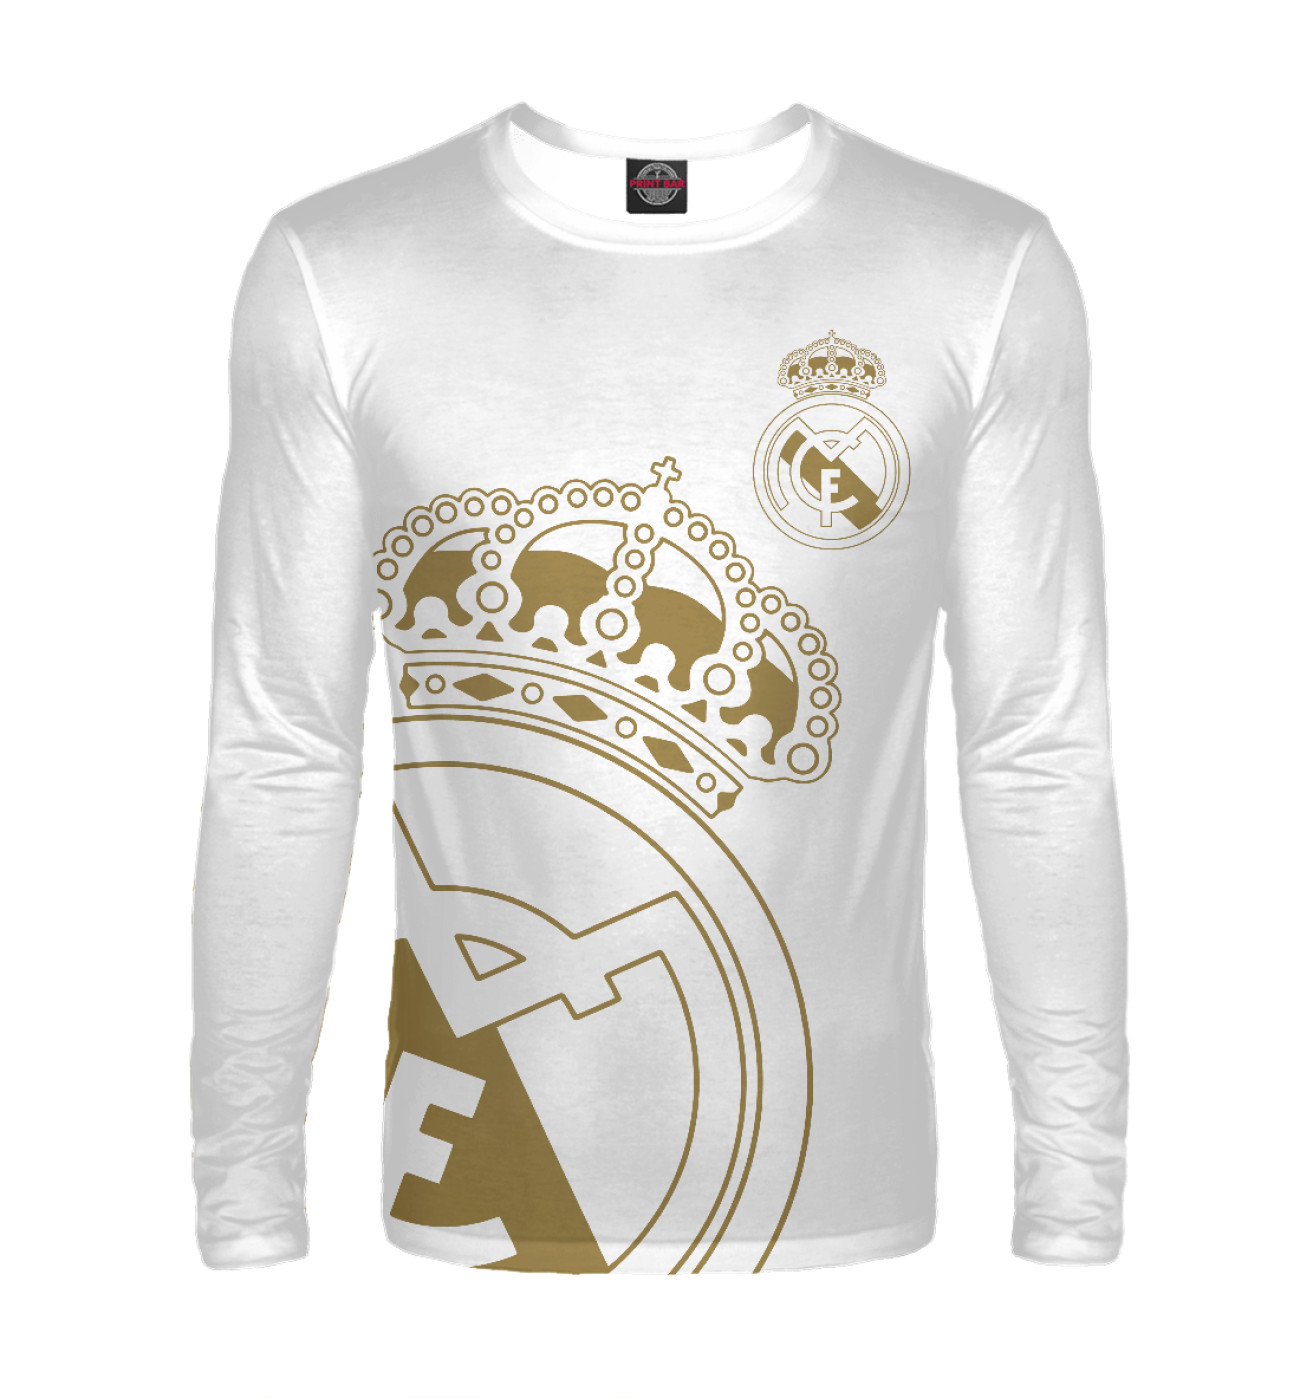 Мужской Лонгслив Real Madrid Gold, артикул: REA-864768-lon-2